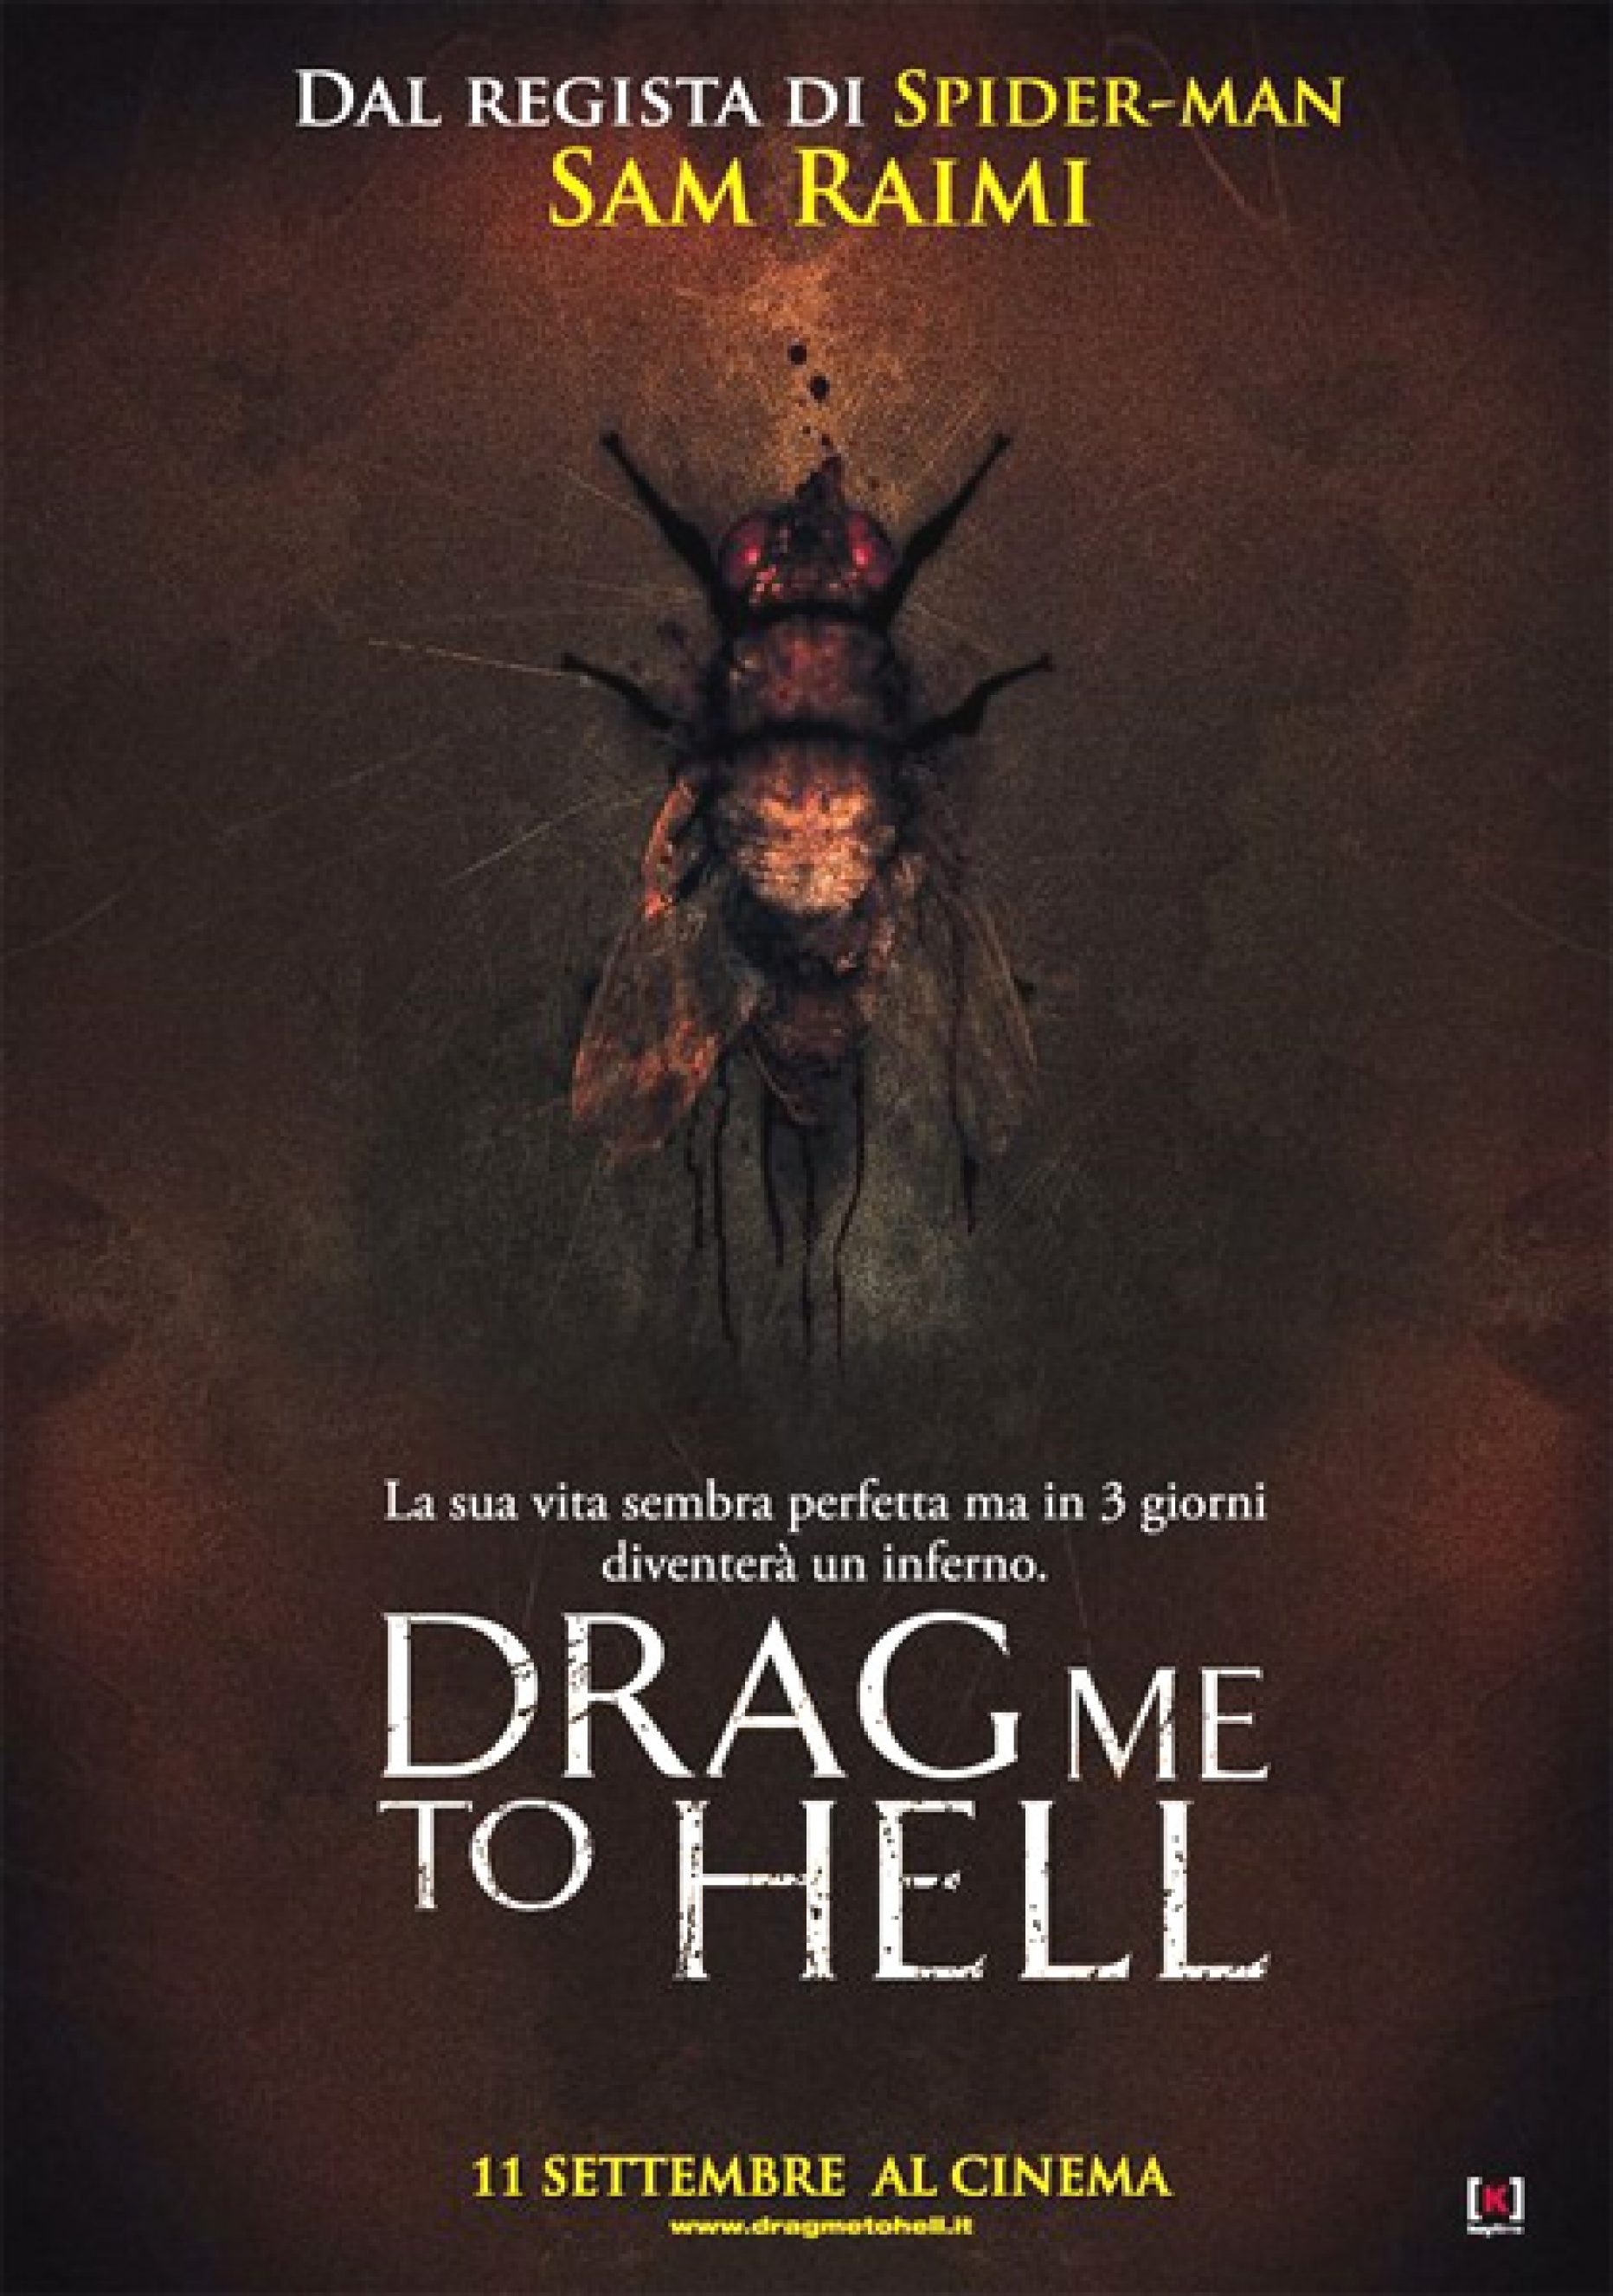 Drag Me to Hell (Raimi, 2009)